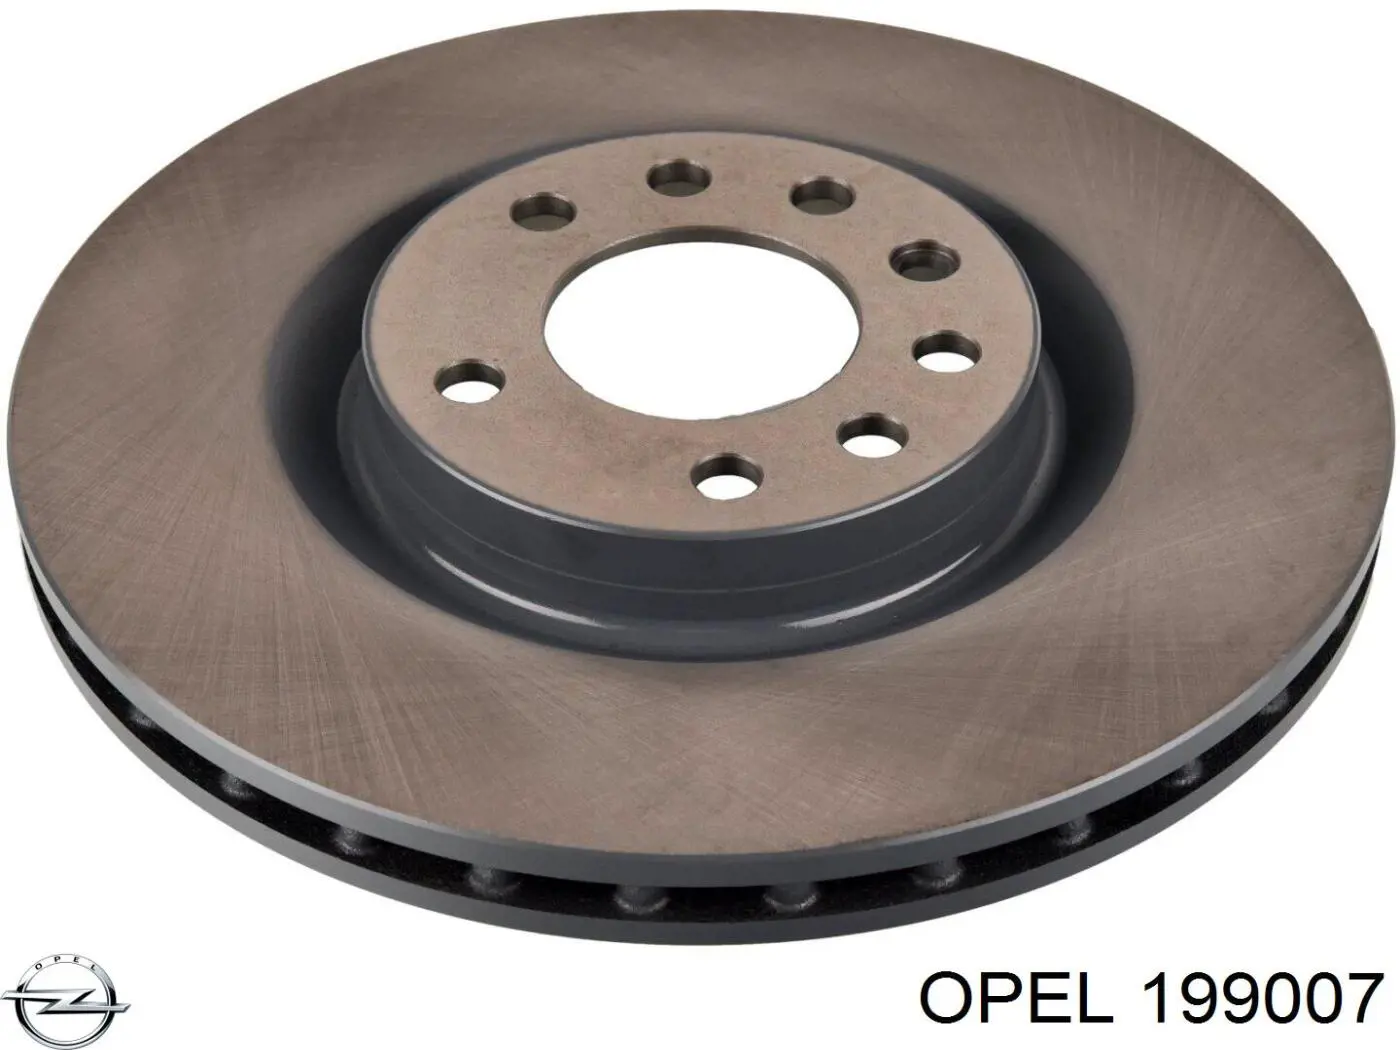 199007 Opel anel airbag de contato, cabo plano do volante